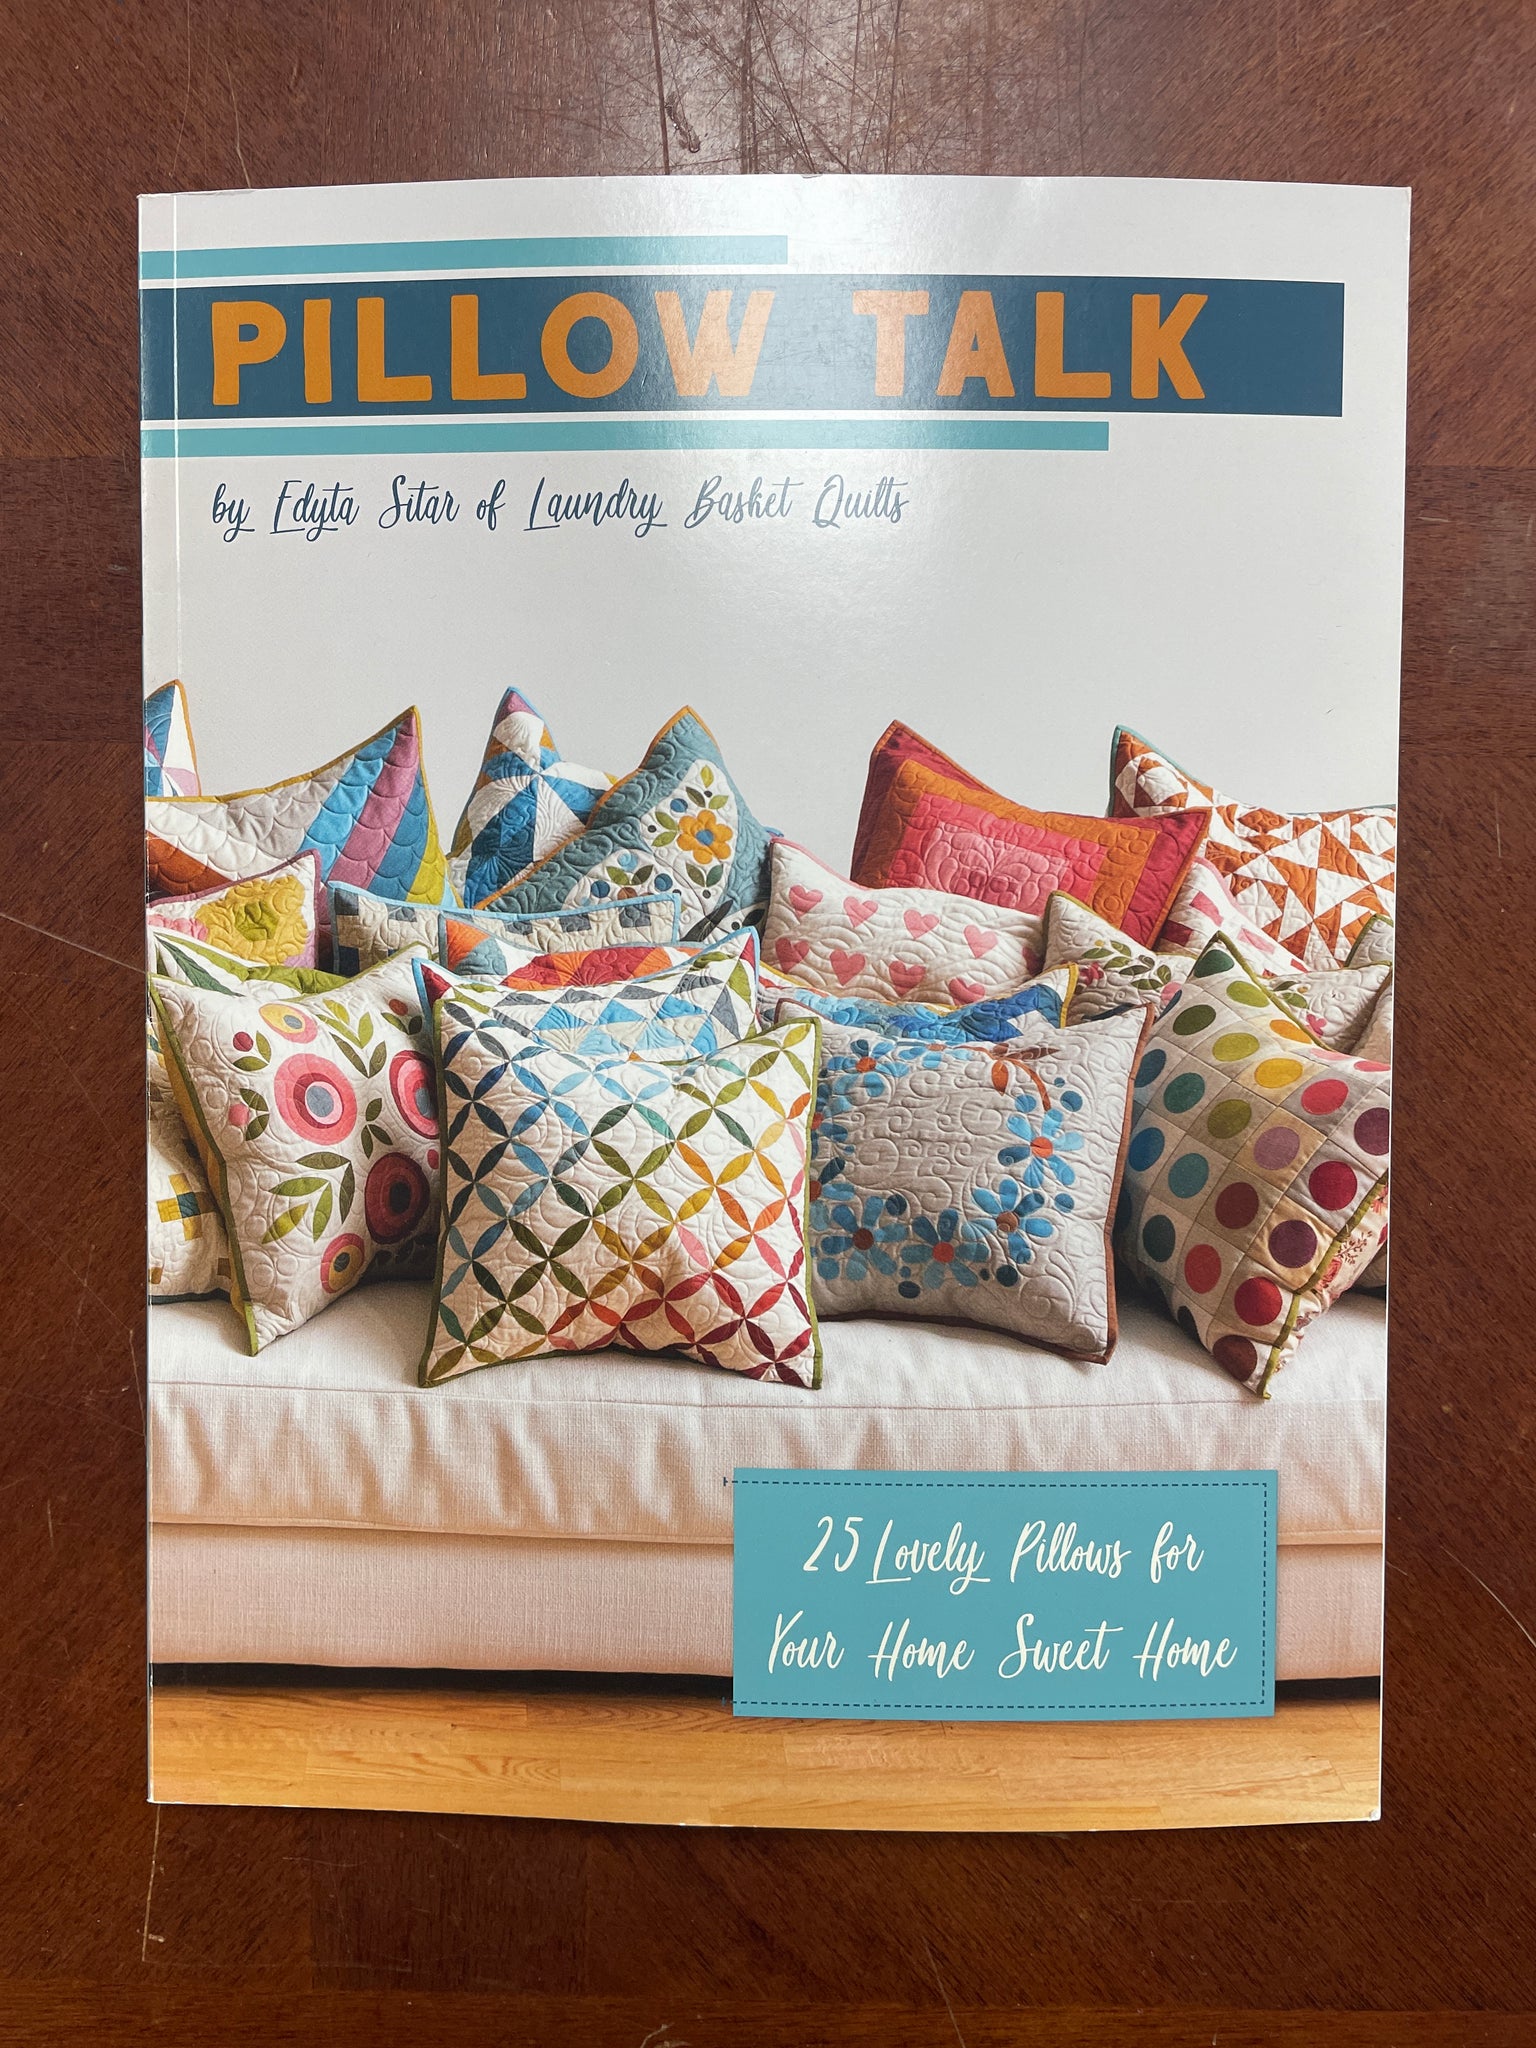 2019 Quilted Pillow Book - "Pillow Talk"